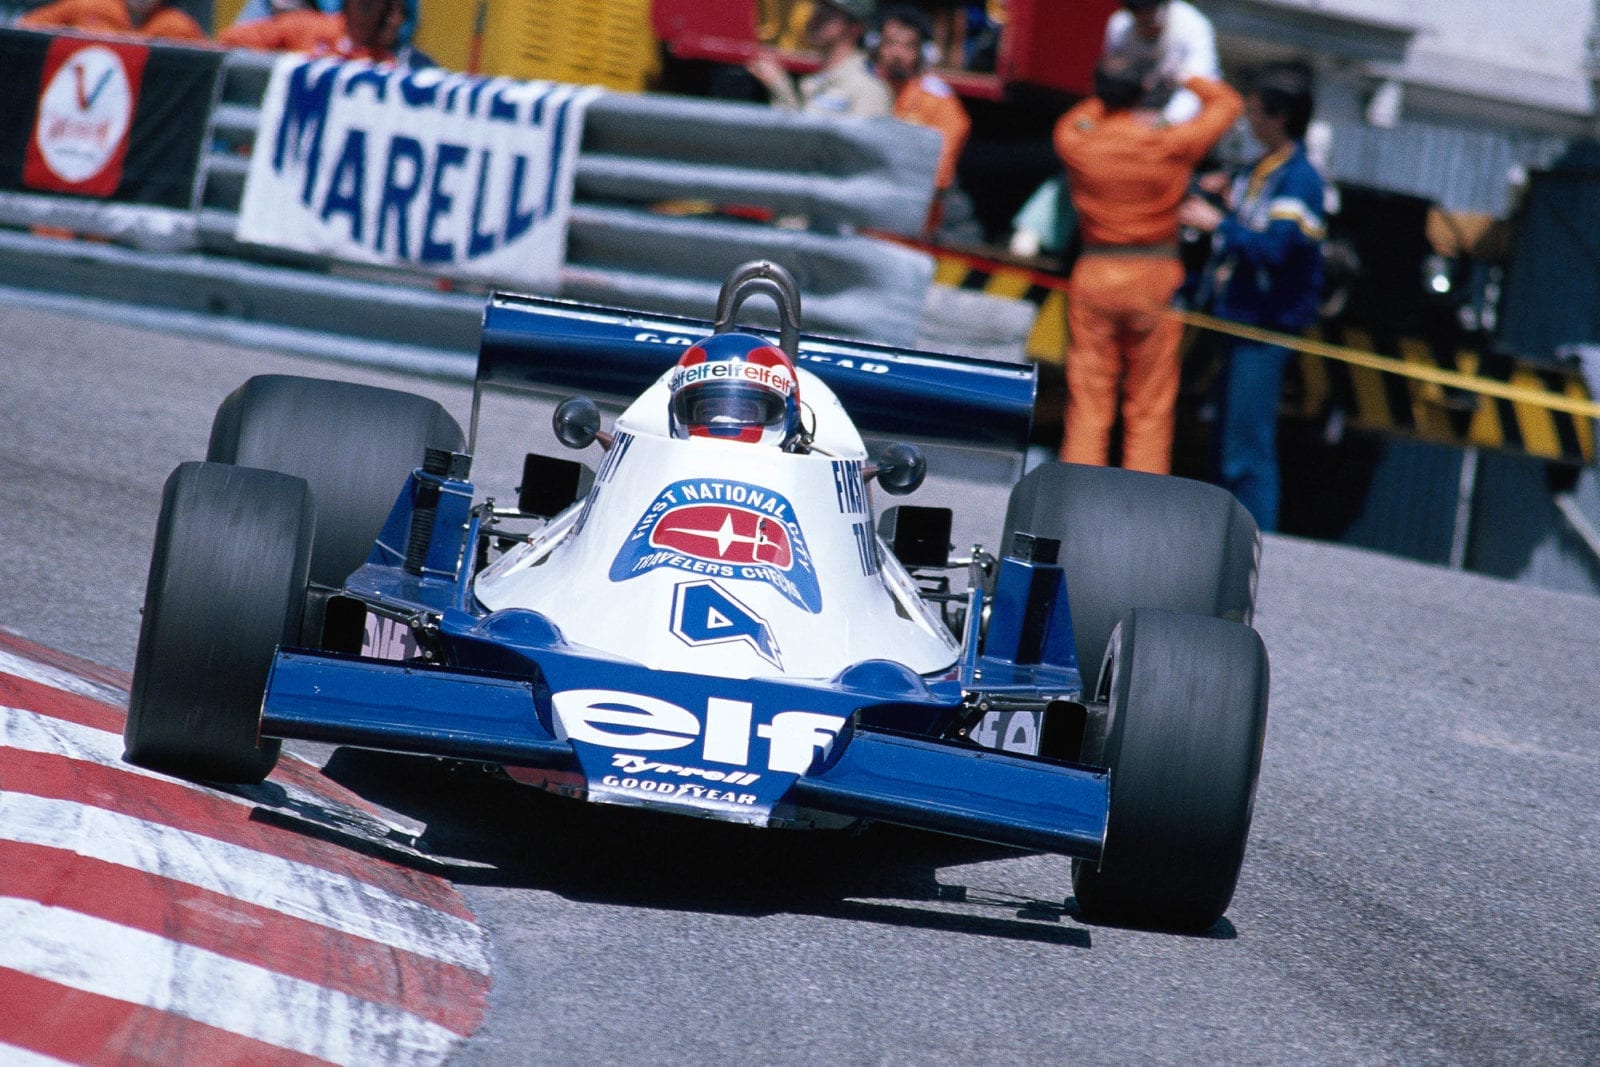 Patrick Depailler (Tyrrell) driving at the 1978 Monaco Grand Prix.